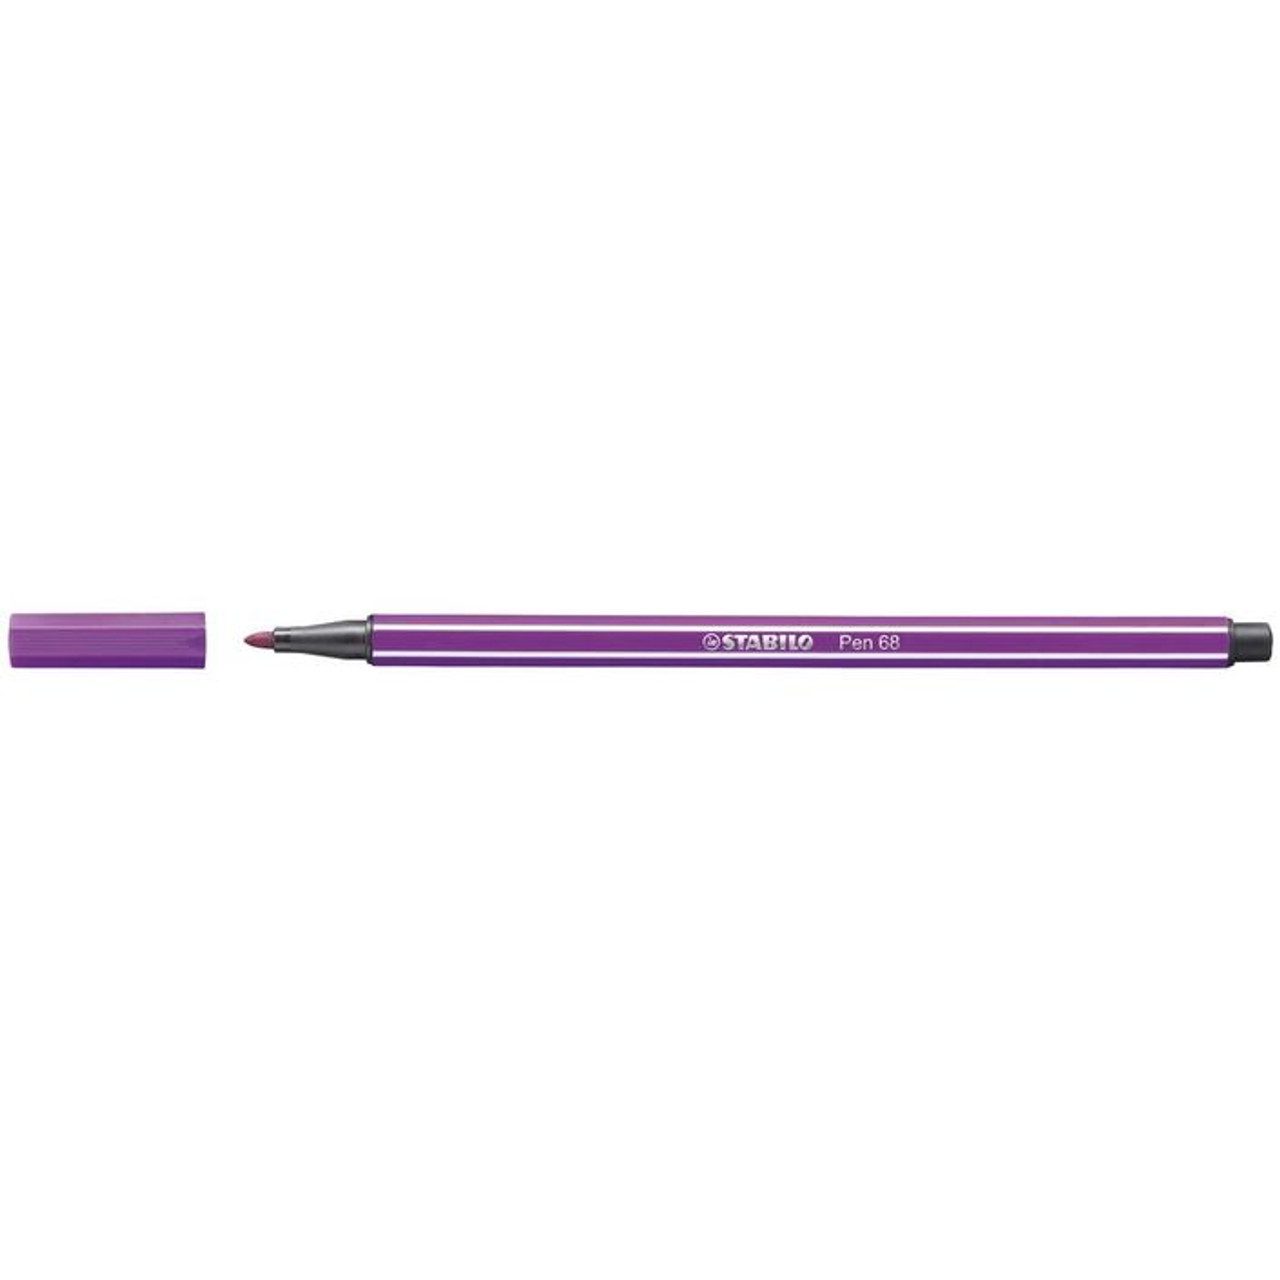  STABILO Premium Fibre-Tip Pen Pen 68 brush - Box of 10 - Black  : Office Products